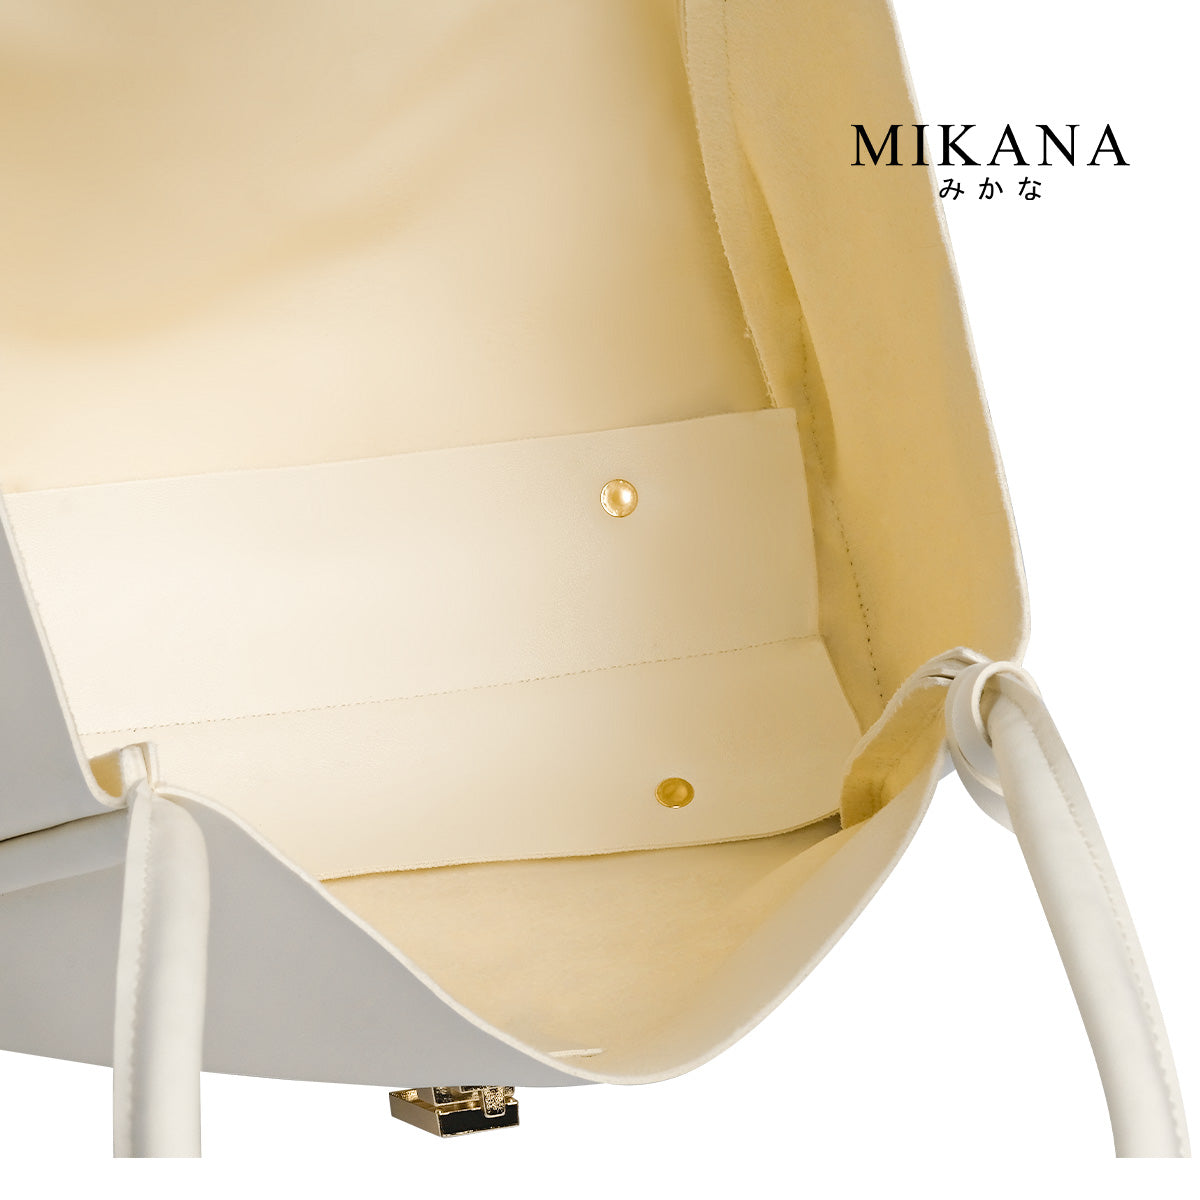 Mikana Ichikawa Tote Bag Shoulder Bag for Women